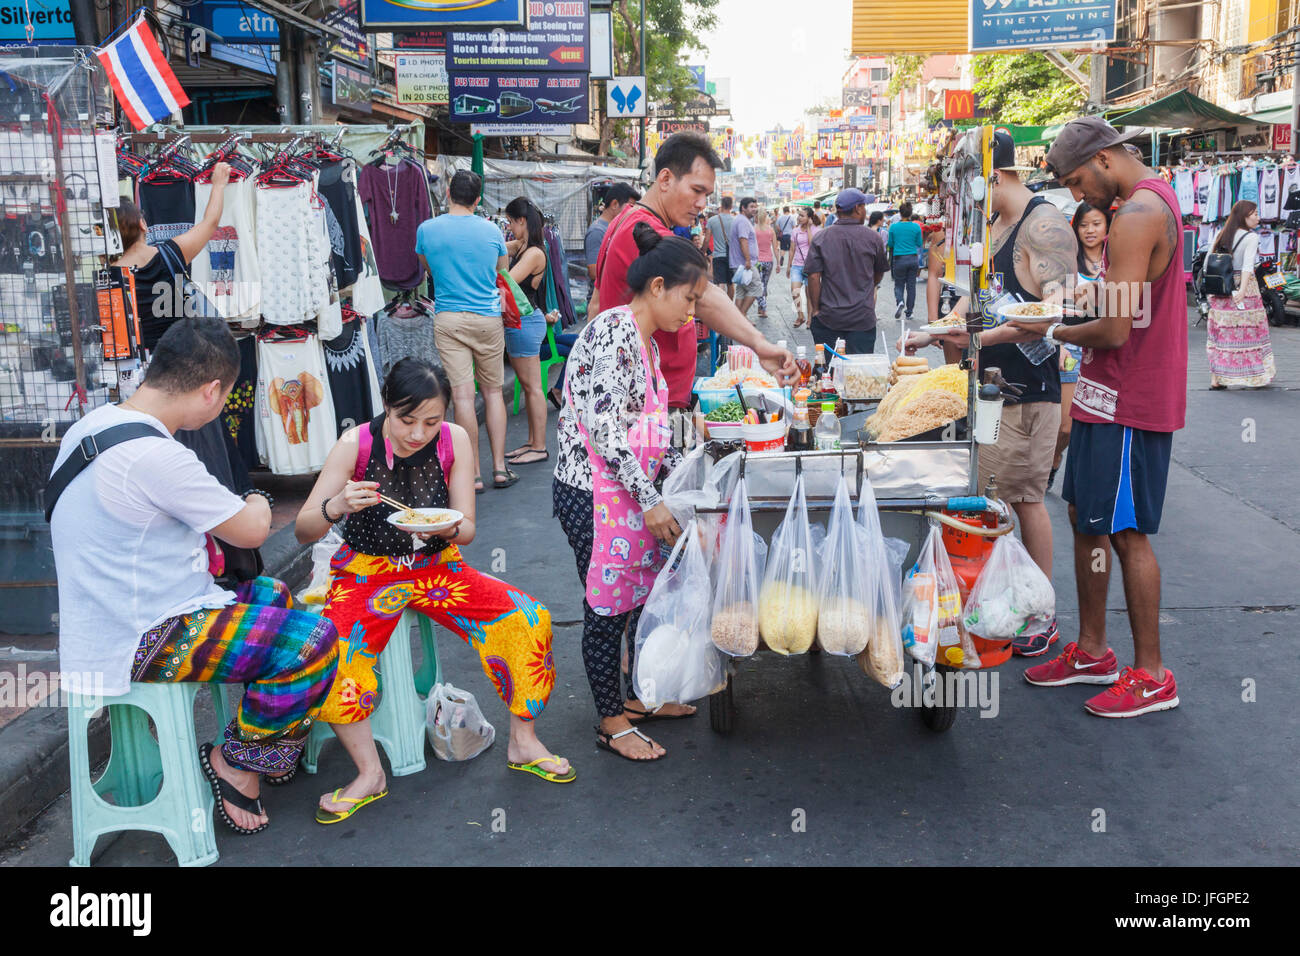 Thailand, Bangkok, Khaosan Road, Street Scene of Food Vendor's Cart and Customers Stock Photo